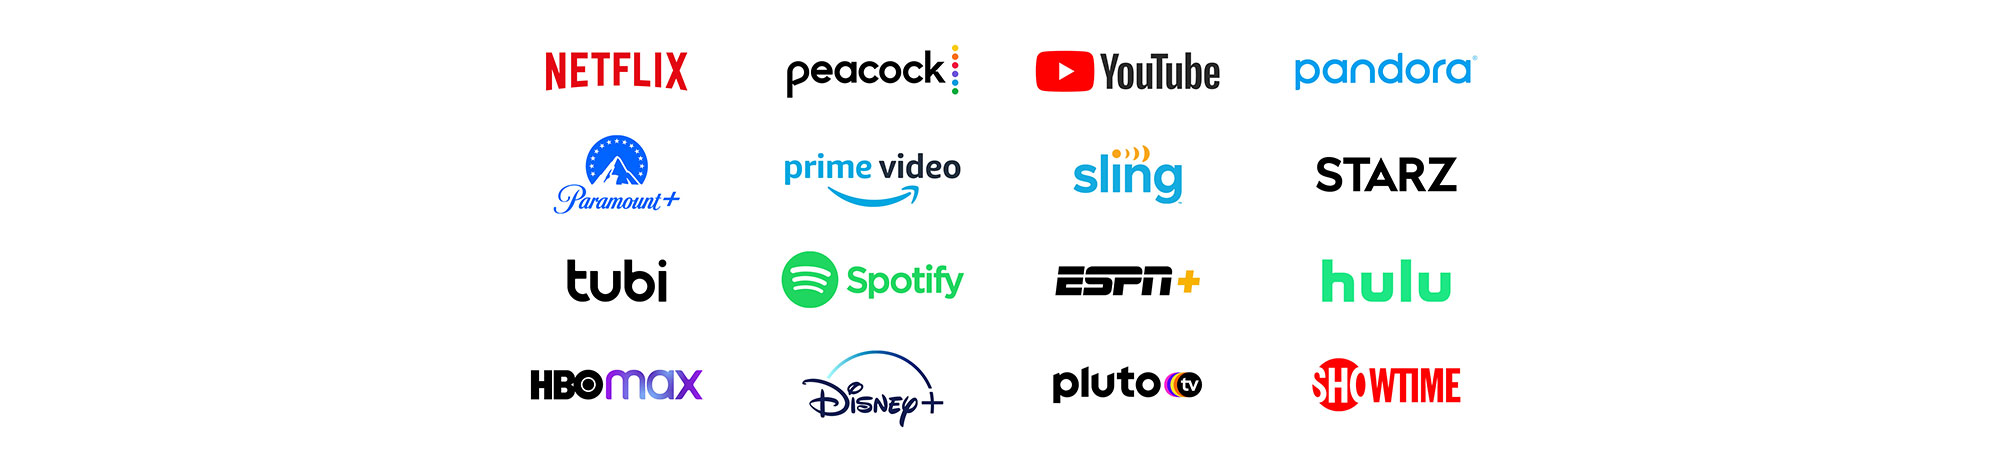 Streaming services logos